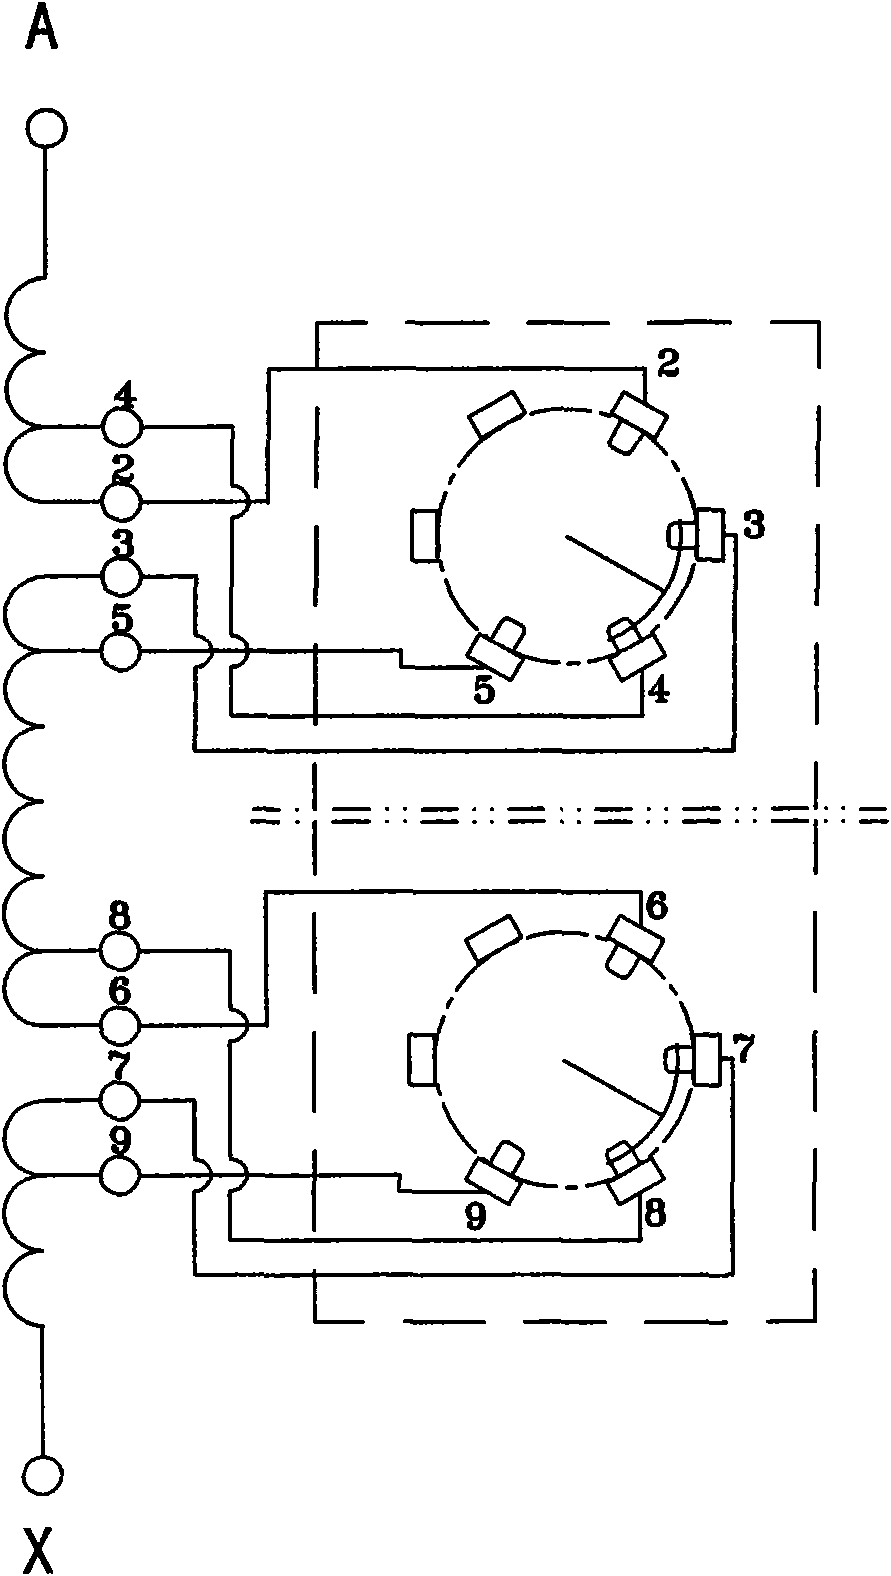 Linked voltage regulation non-excitation tap switch